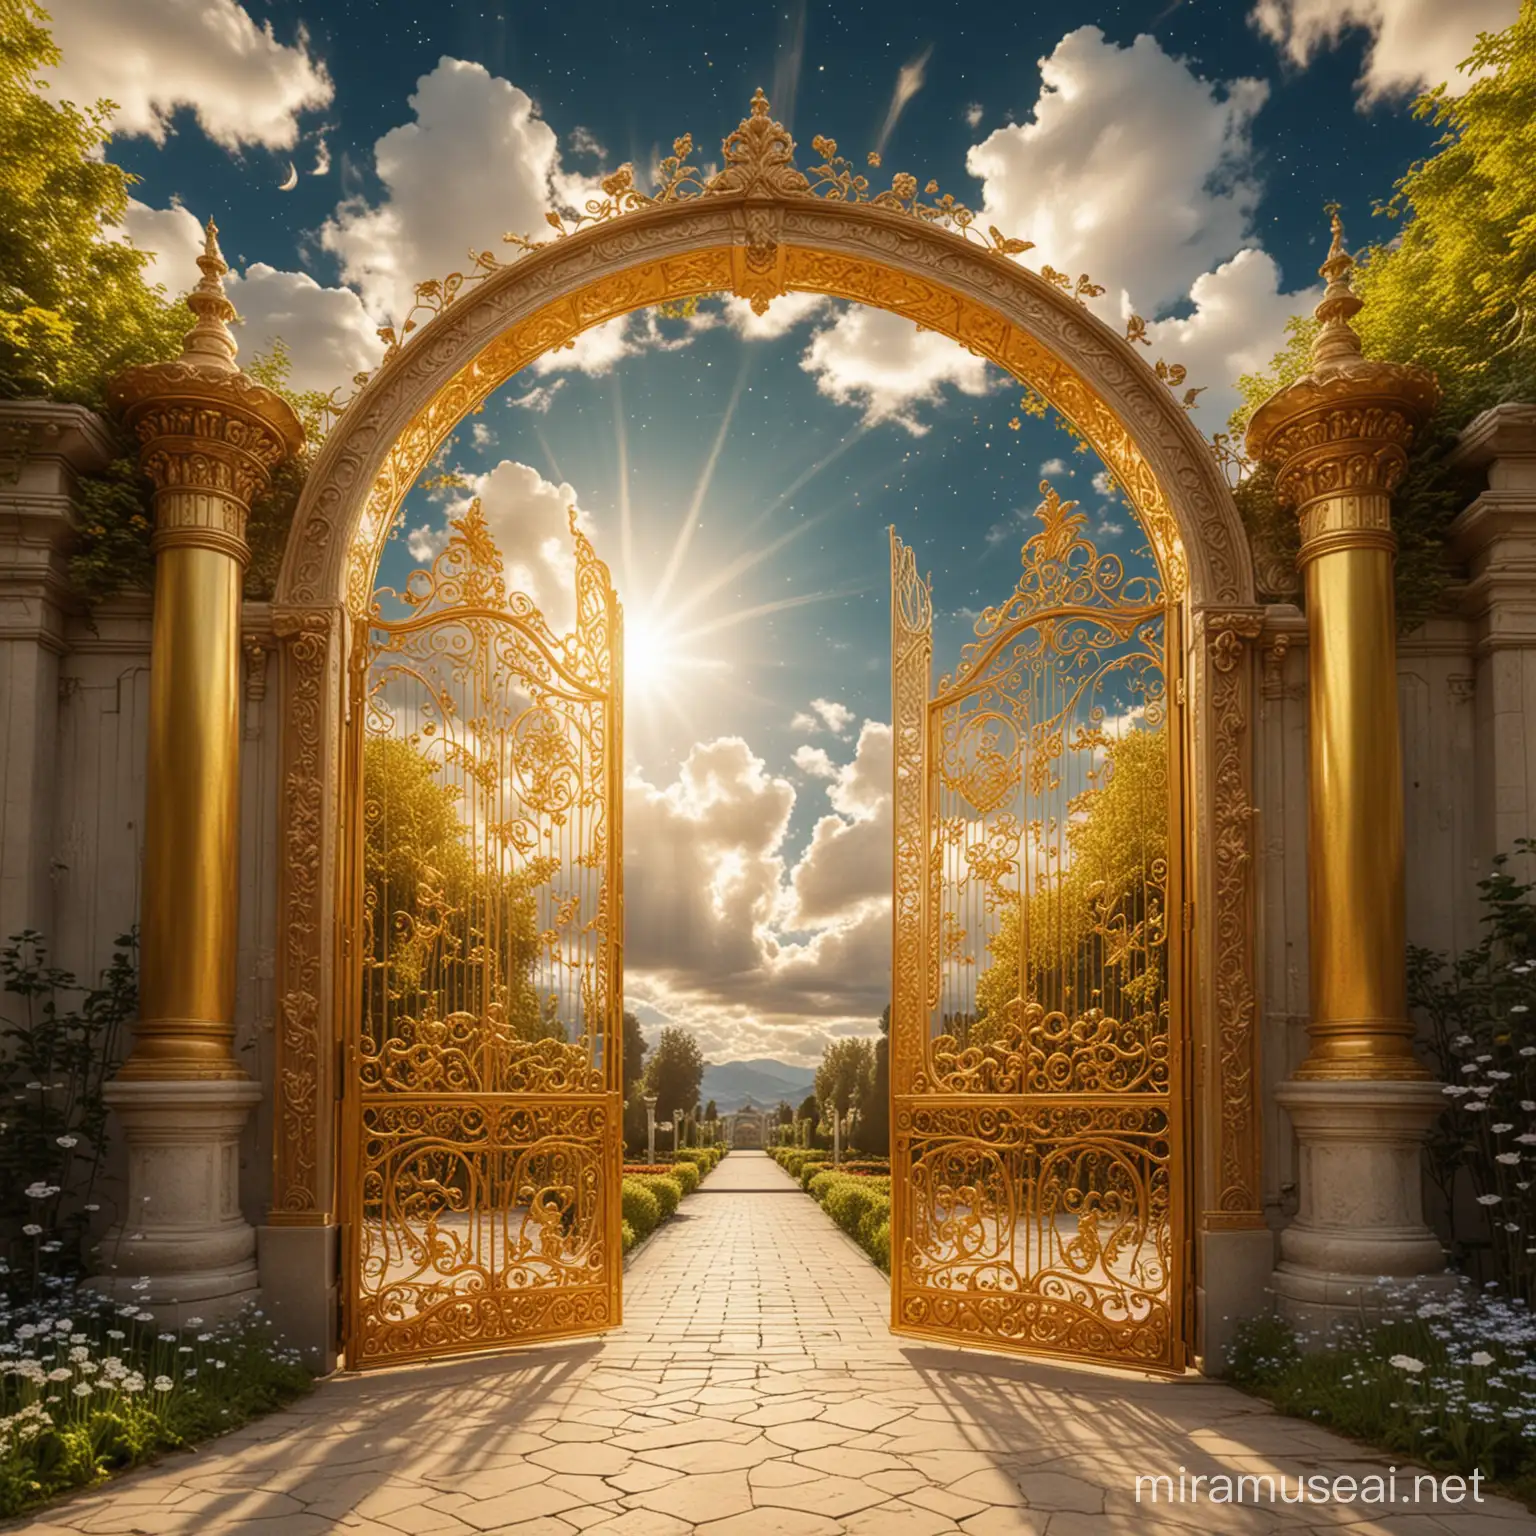 Celestial Garden Entrance to Heavenly Paradise with Golden Gates